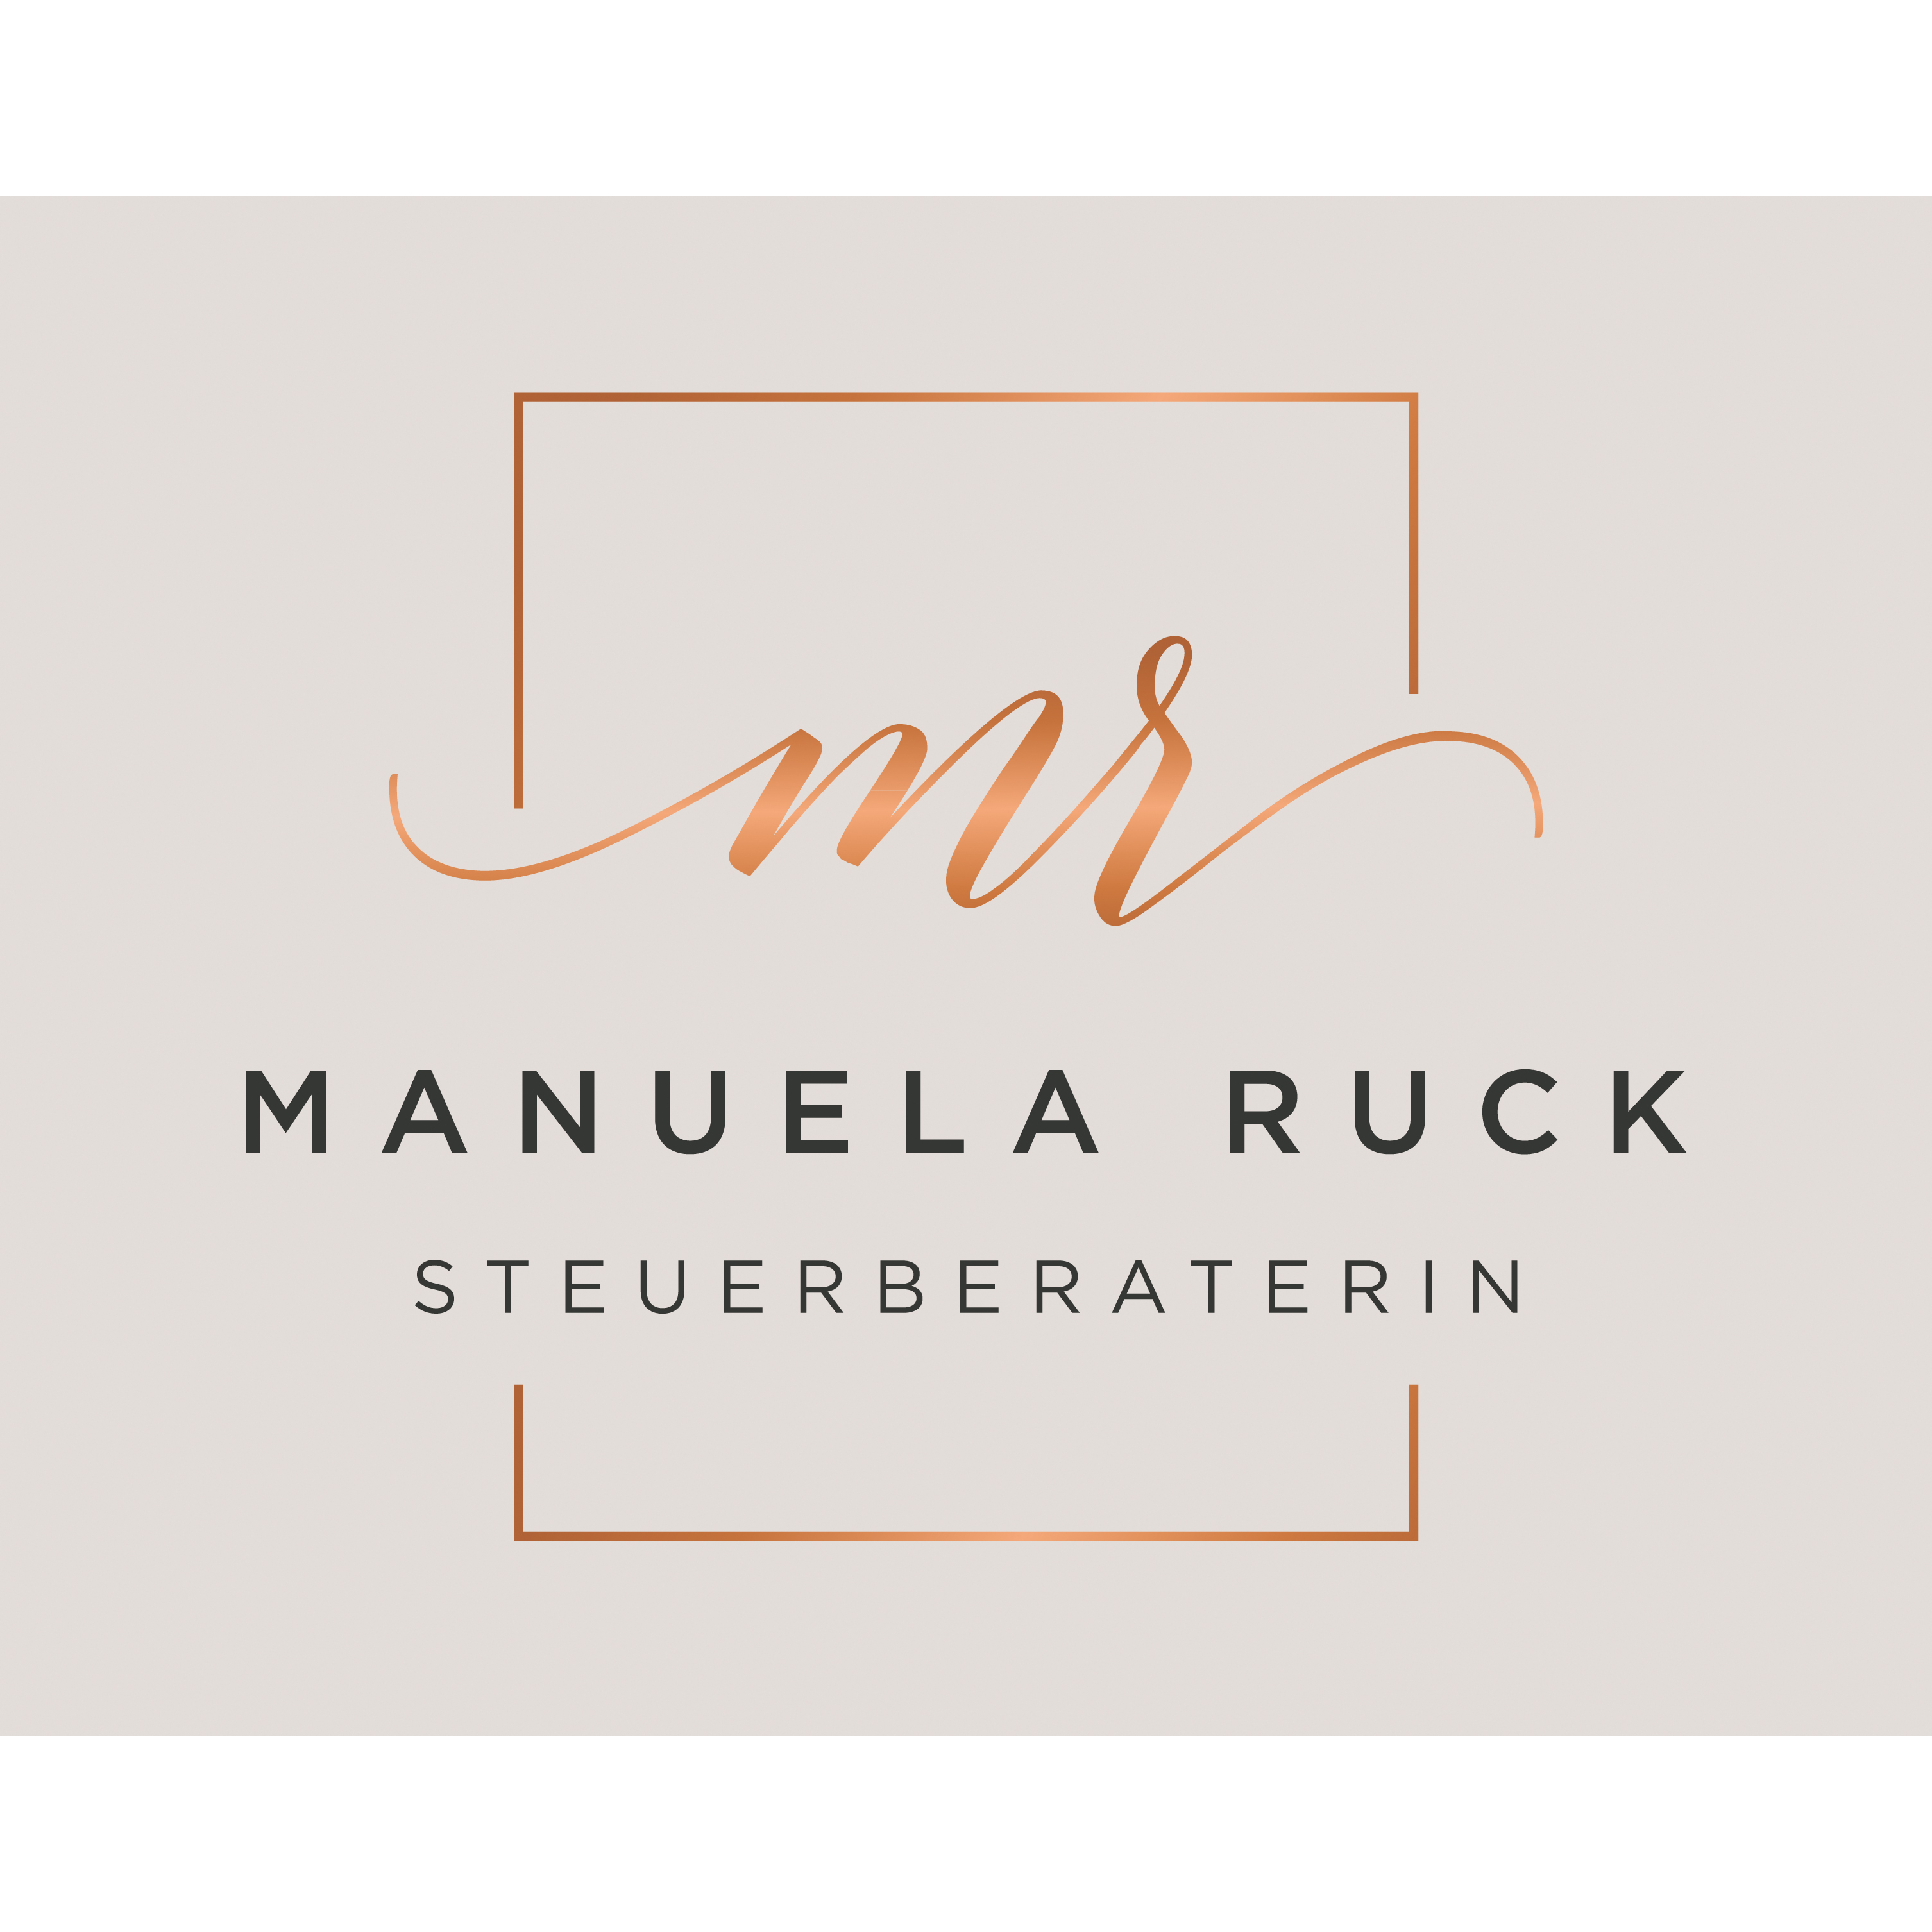 Manuela Ruck - Steuerberaterin in München - Logo